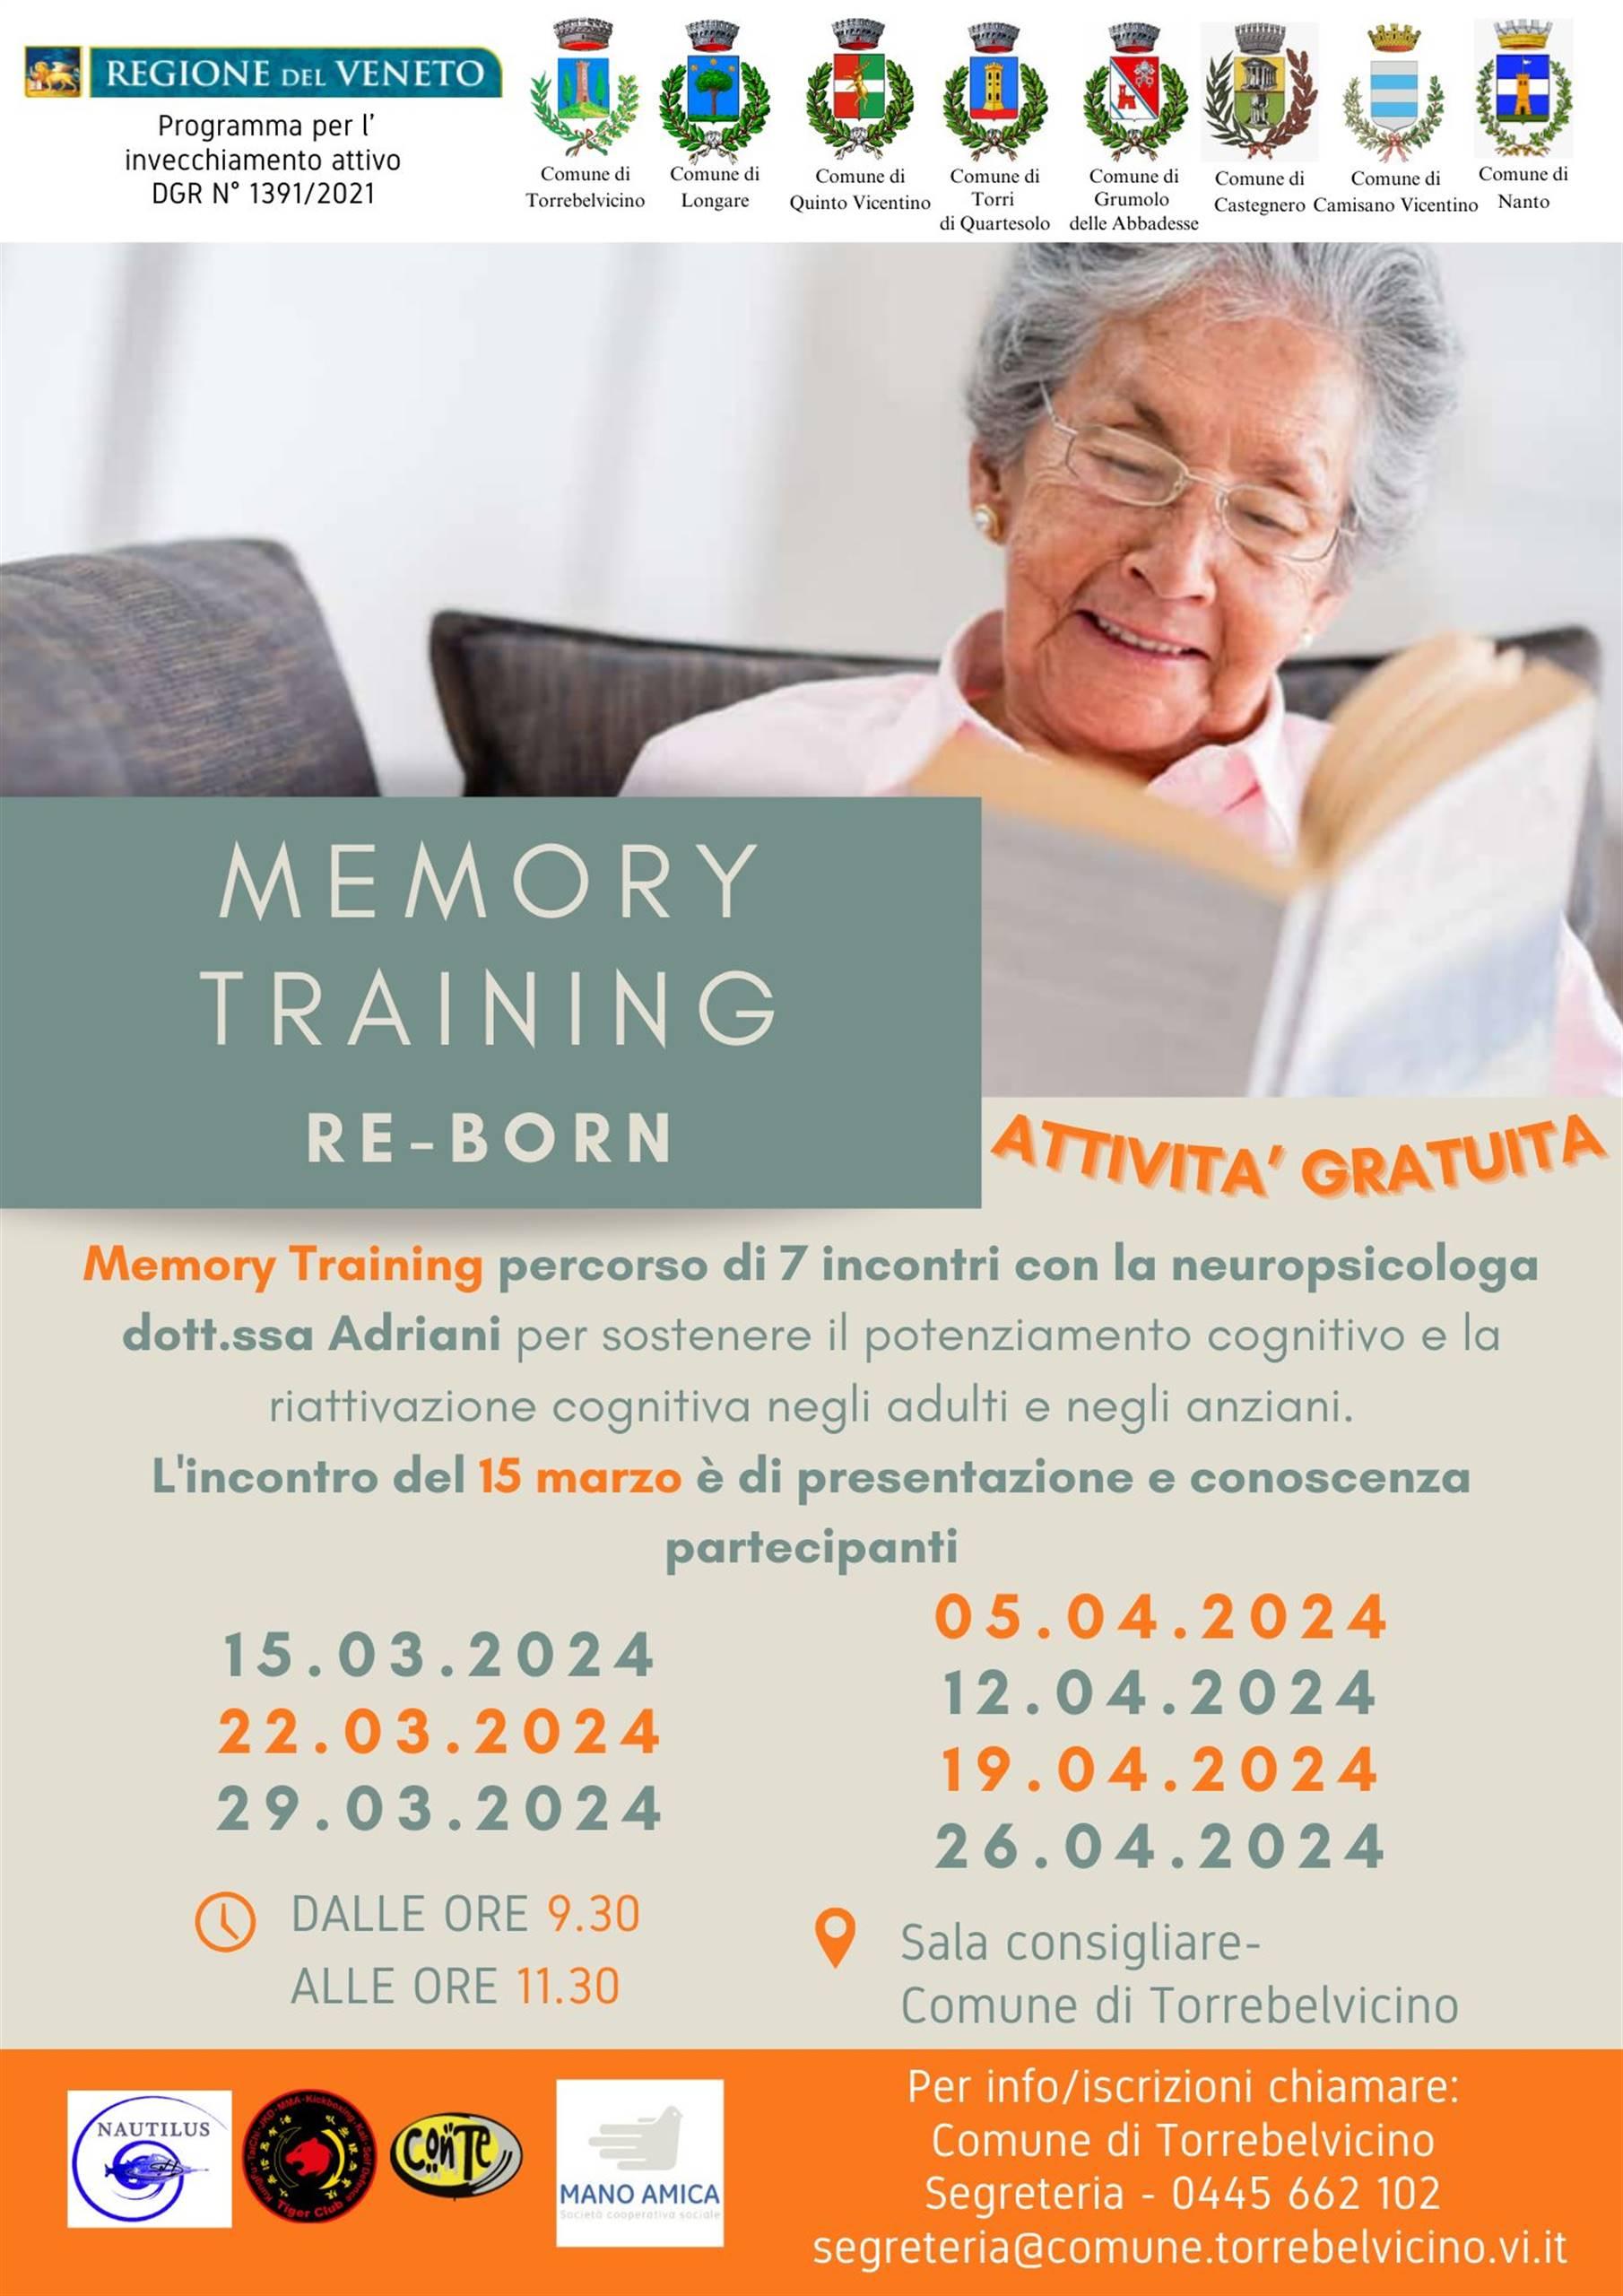 Memory Training Re-born 